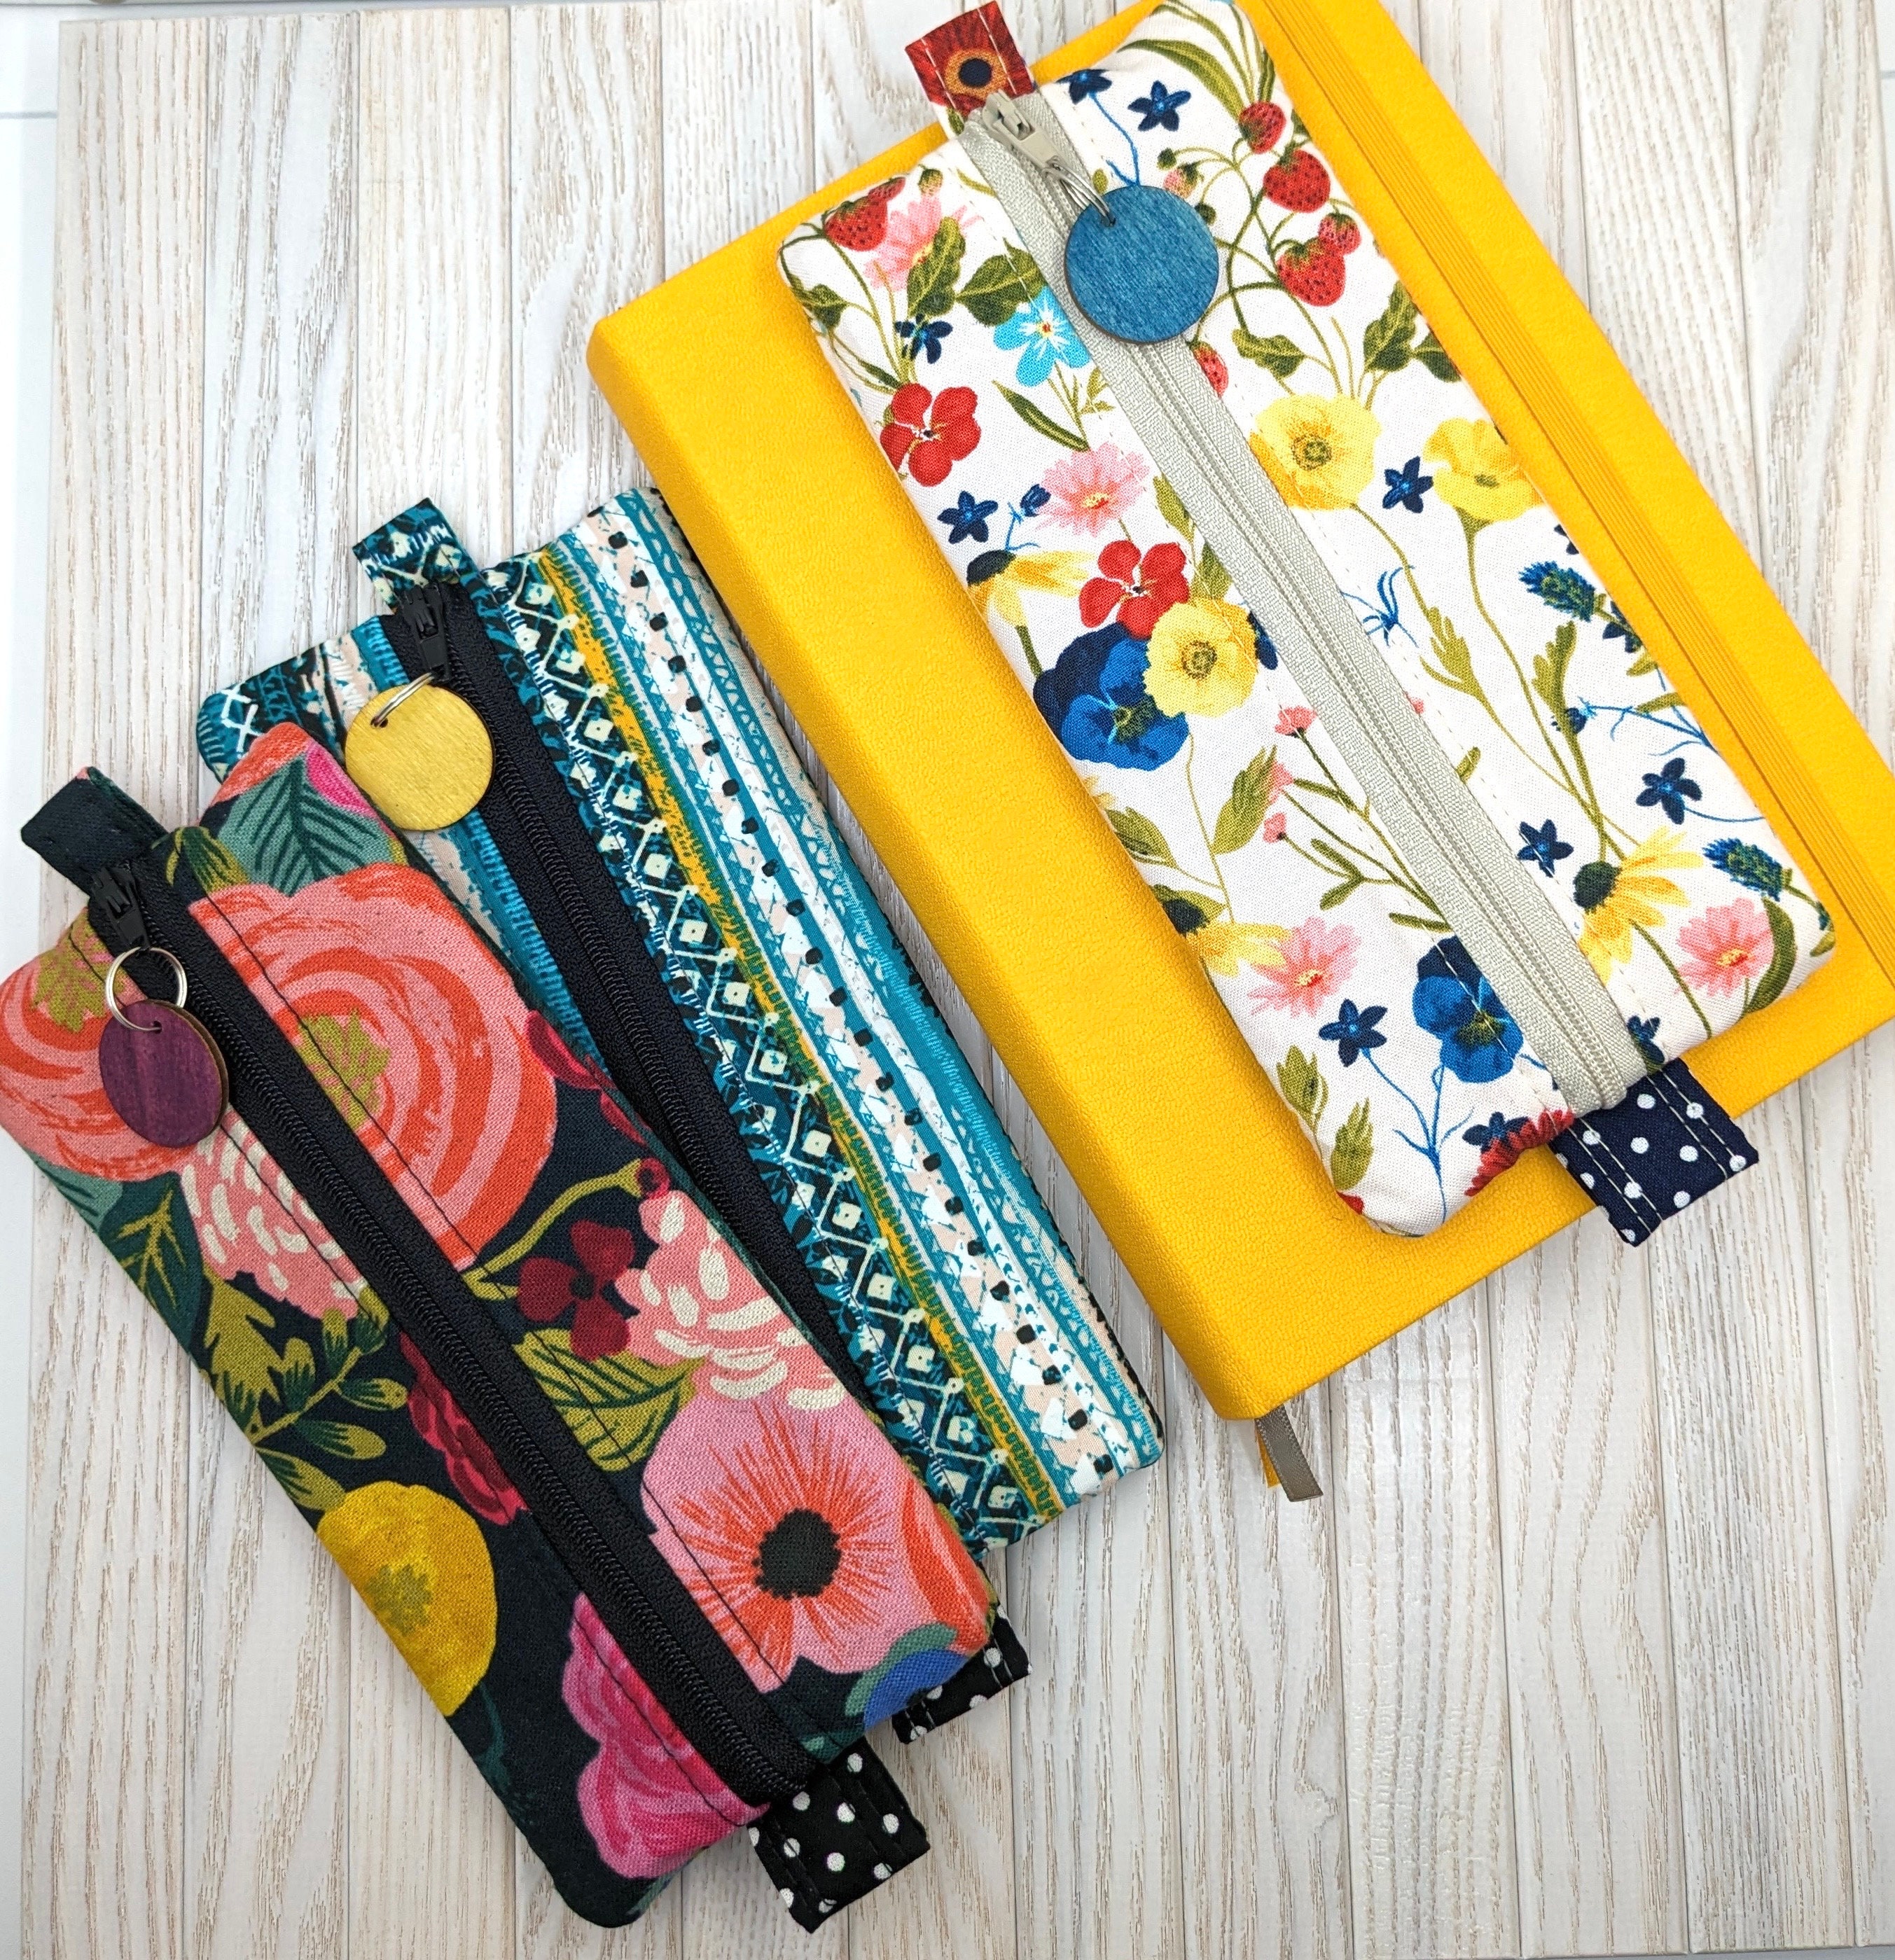  AKIRO Pencil Case, Cute Floral Flower Canvas Zipper Pencil Cases  Lovely Fabric Flower Tree Pen Bags Supplies 4 Pcs : Beauty & Personal Care